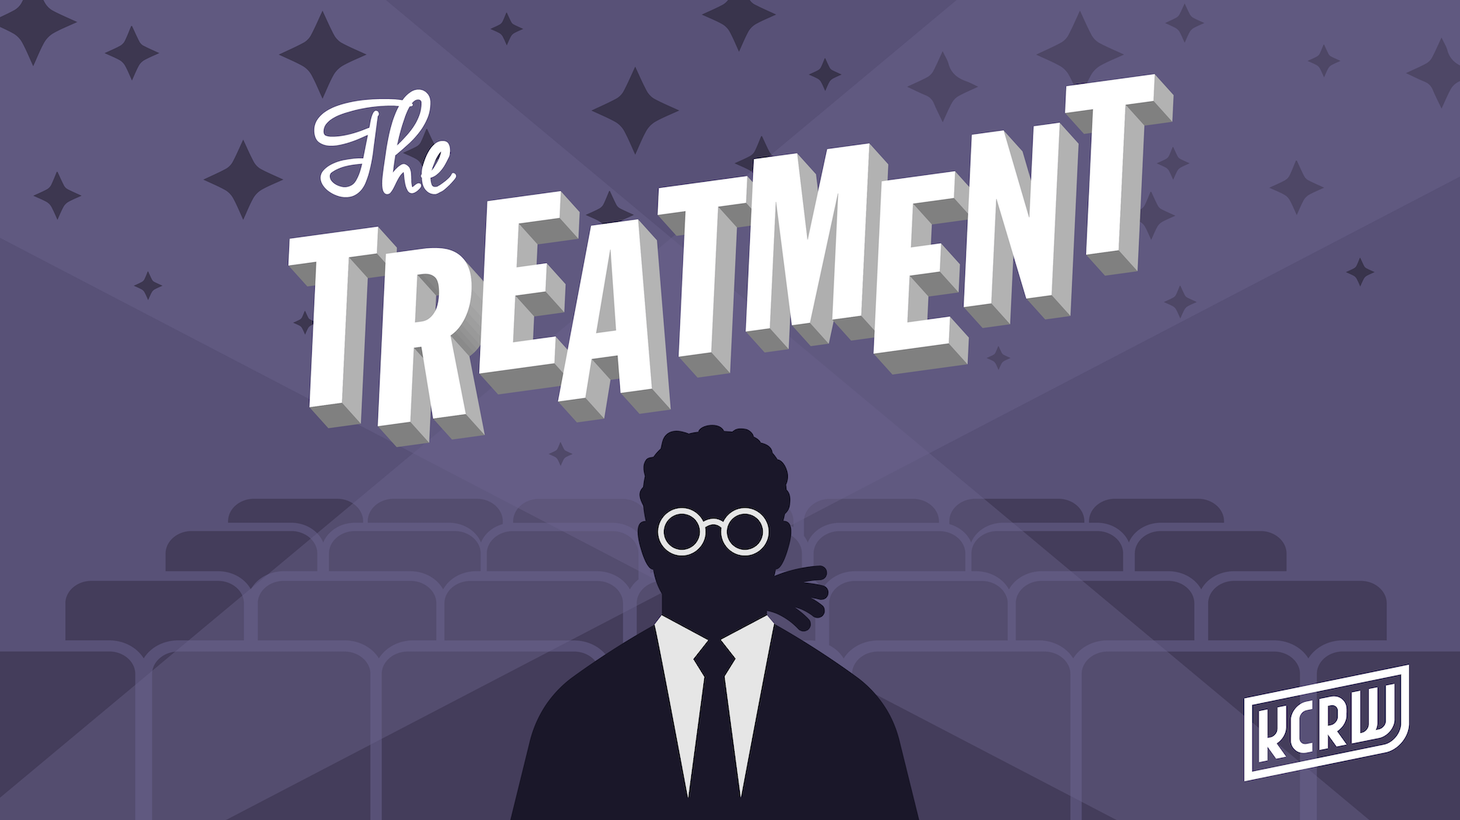 Tim Burton talks about his Oscar-nominated stop-motion animation film, "Frankenweenie."